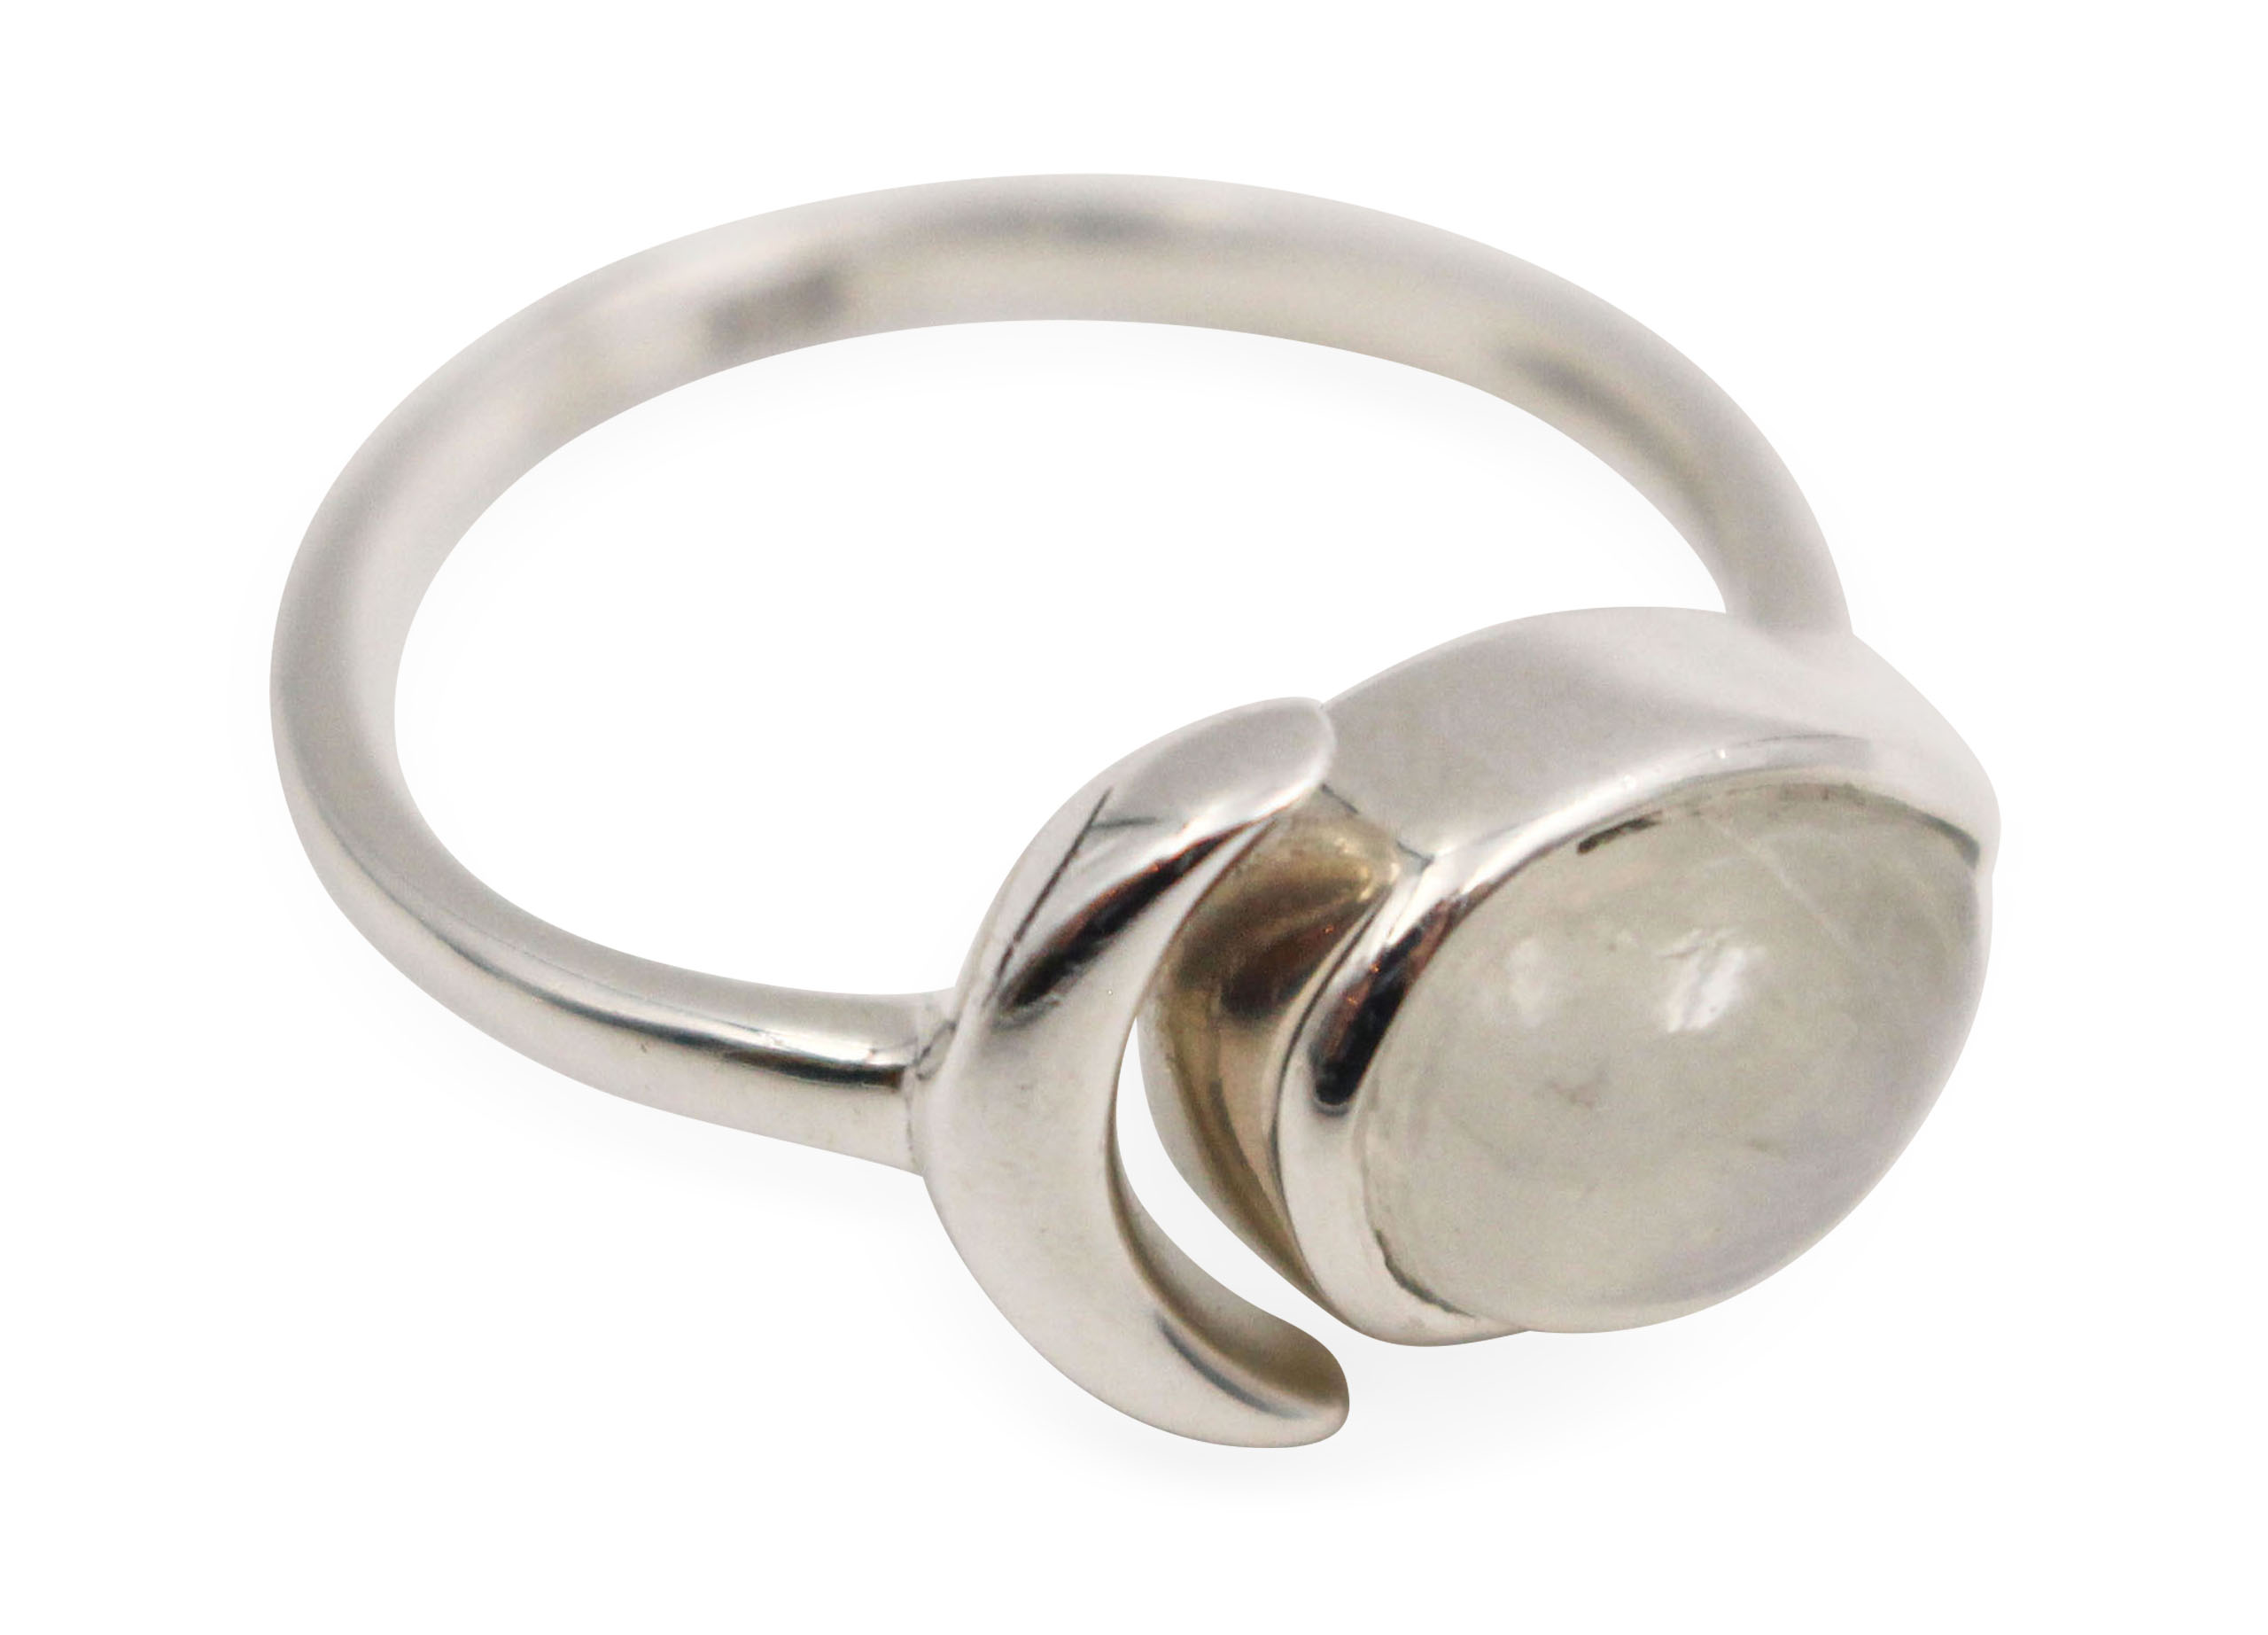 Moonstone Luxury 925 Sterling Silver Ring - Crystal Dreams